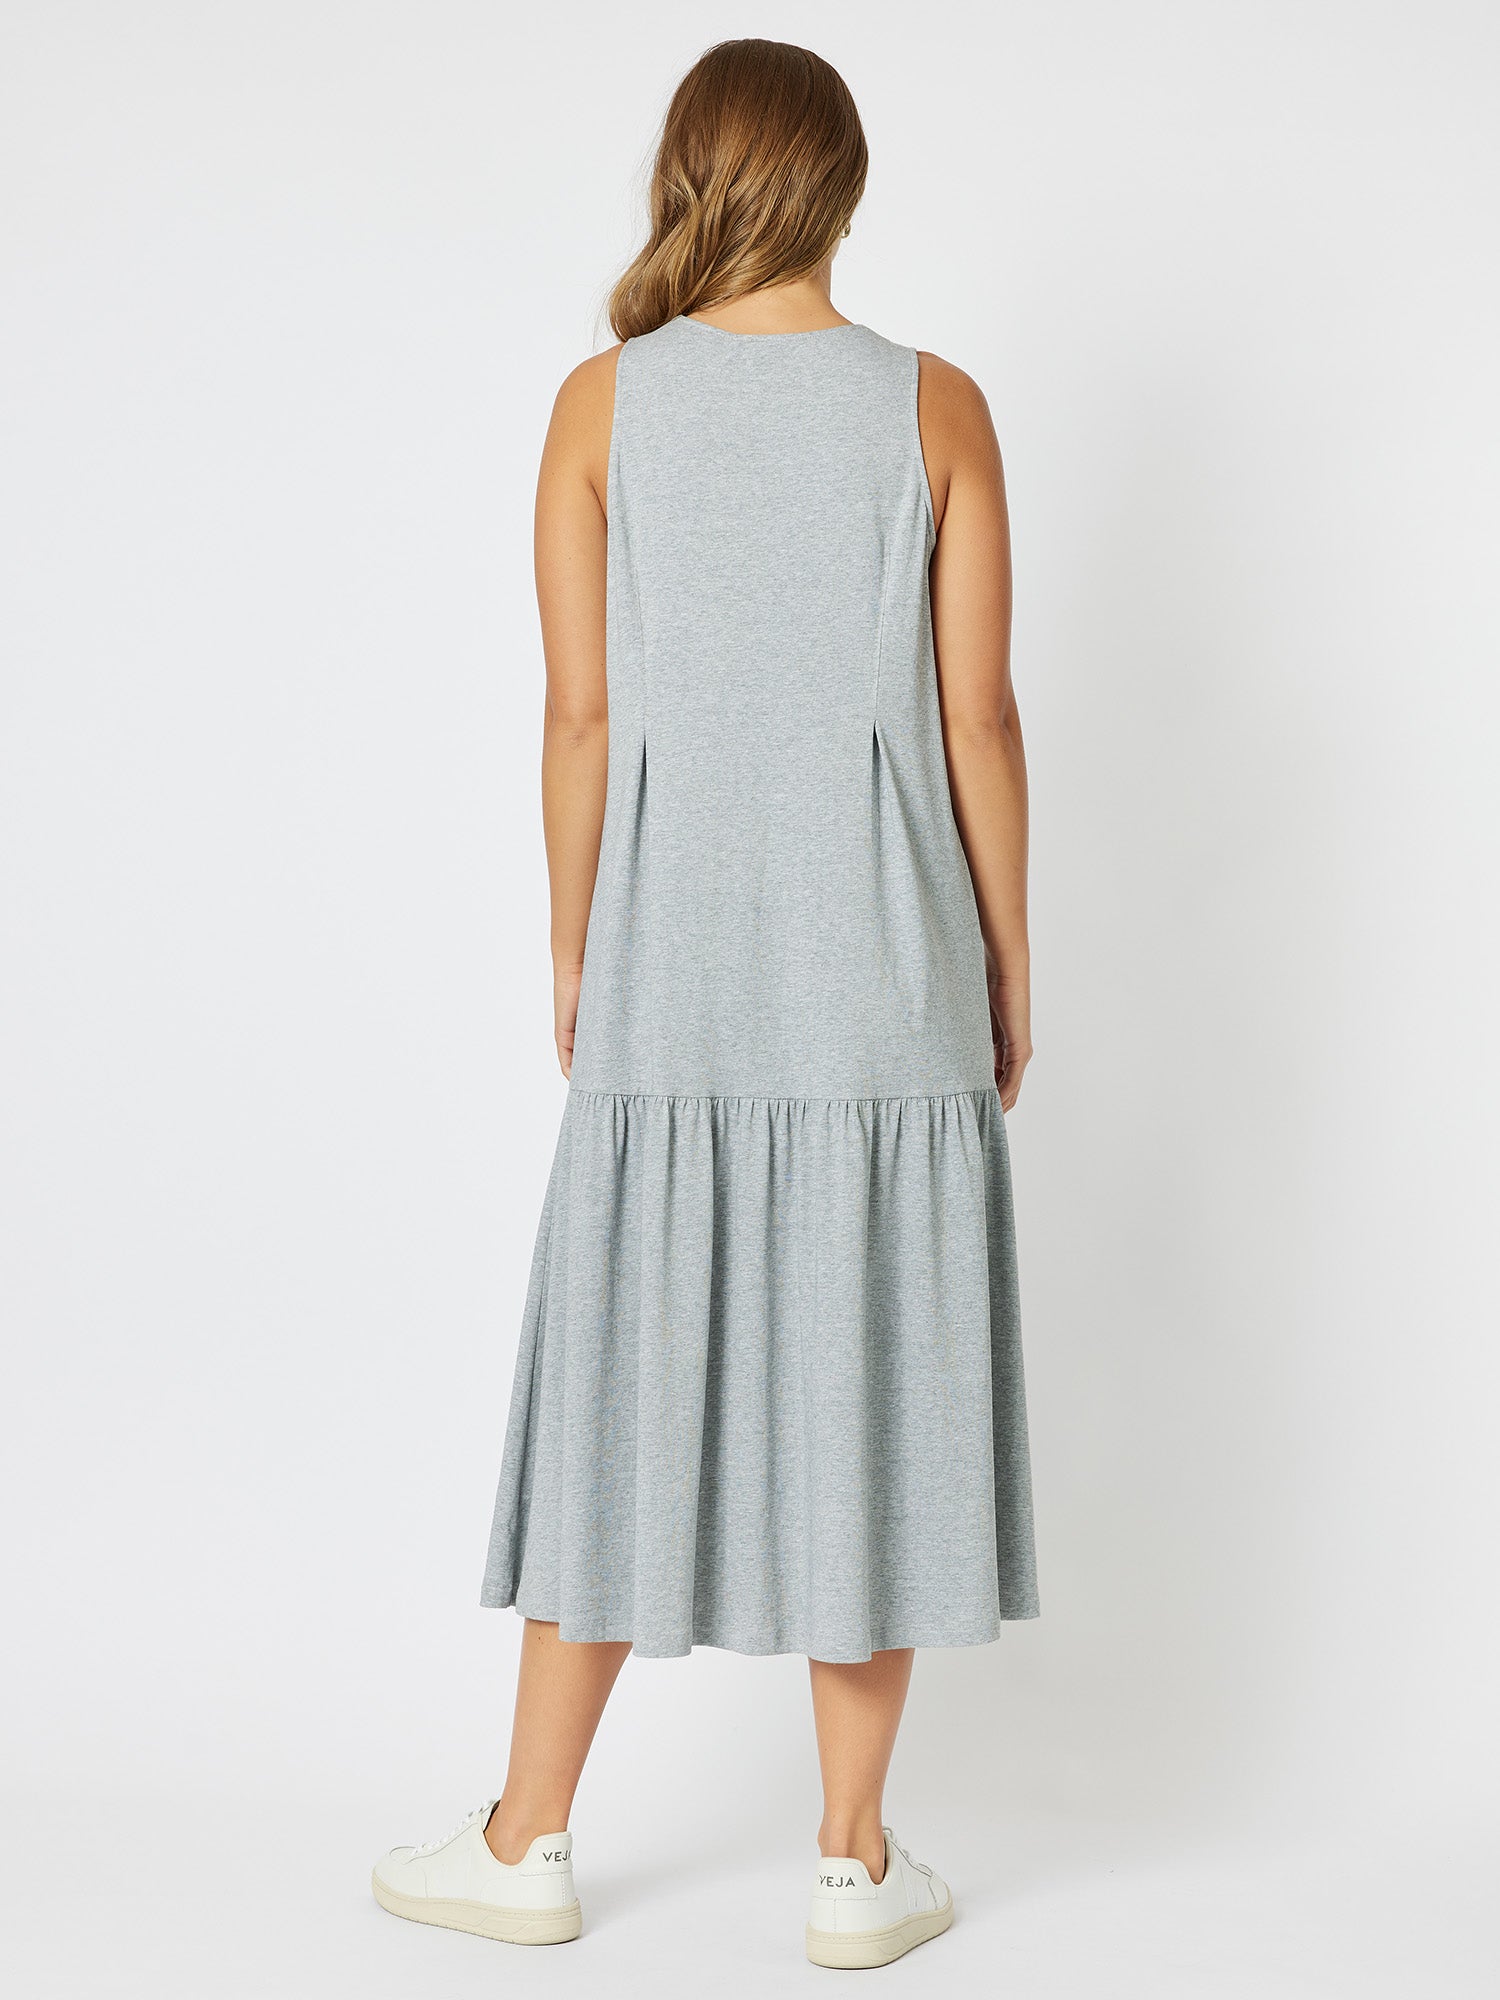 – Veuve Jersey Grey Co Dress - RC & Marle